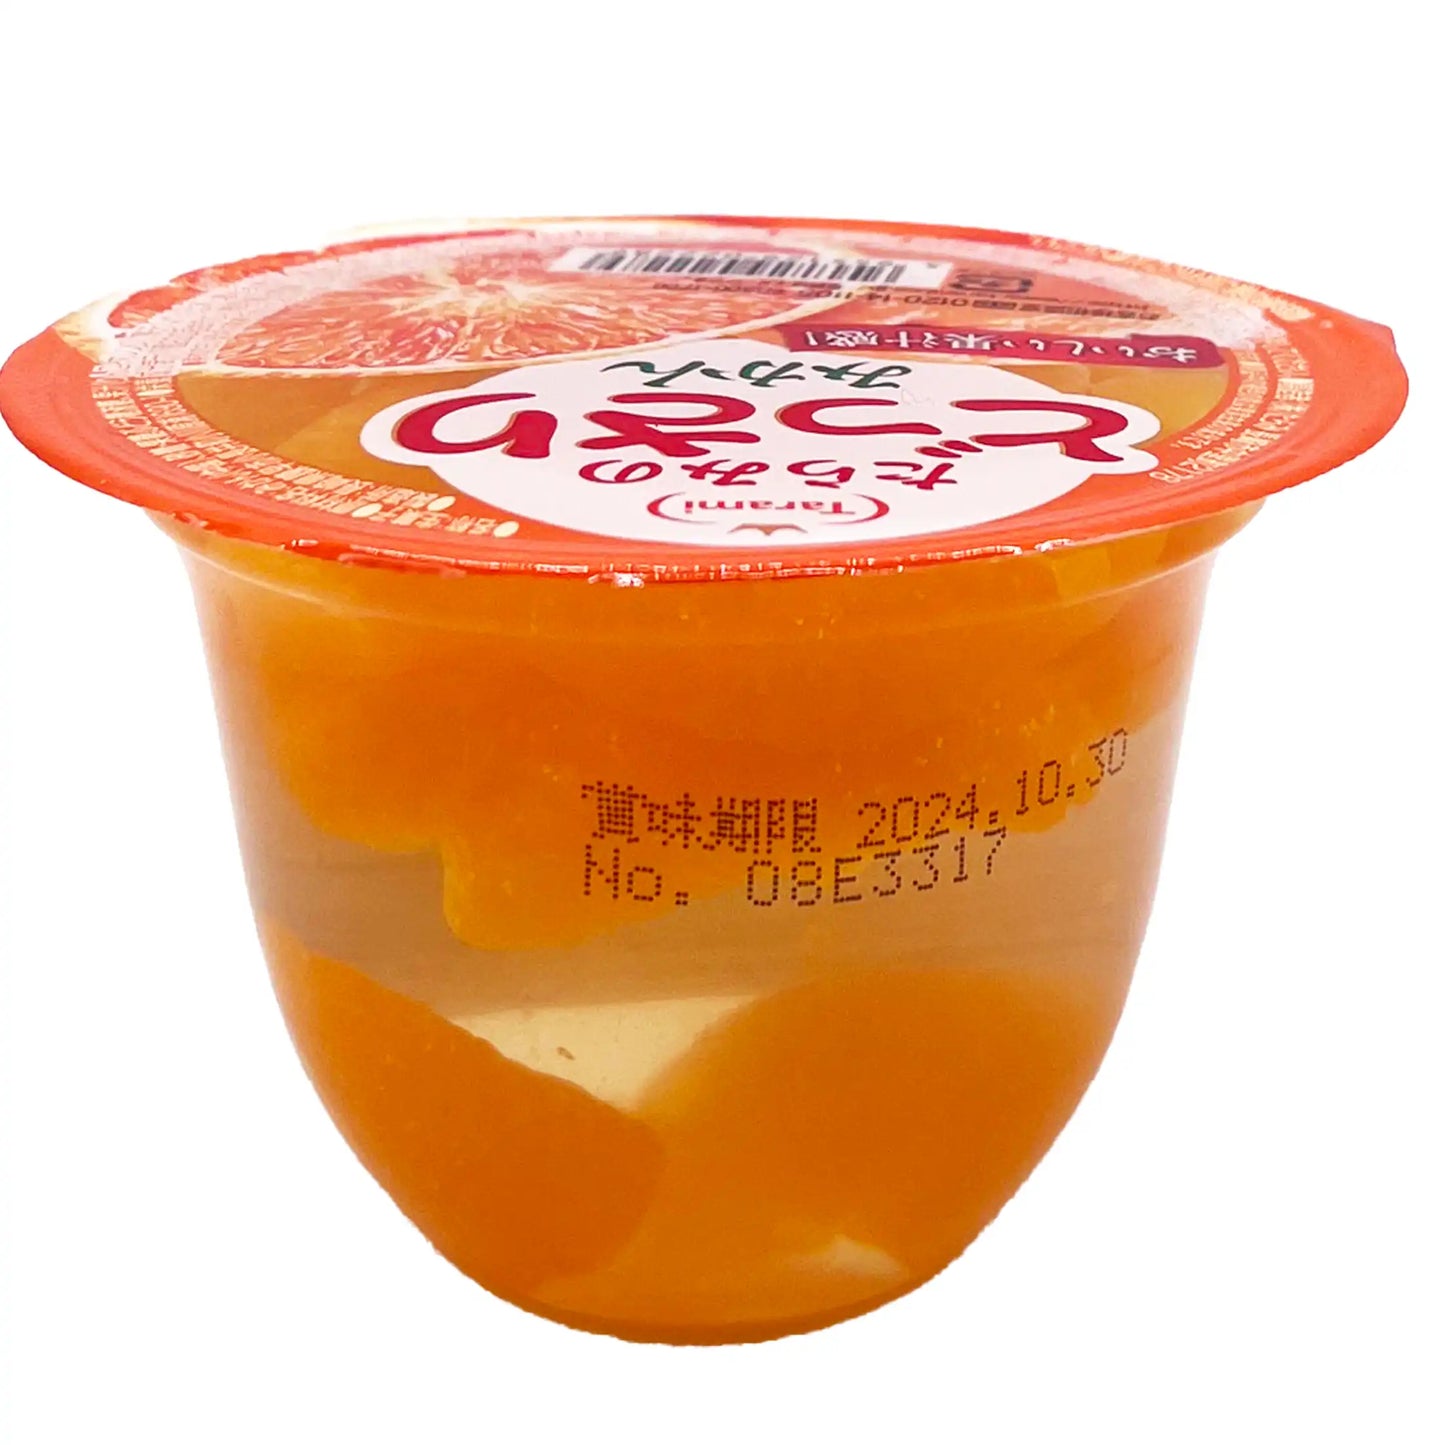 Tarami Dossari Jelly Cup Mikan Orange 8.11 oz